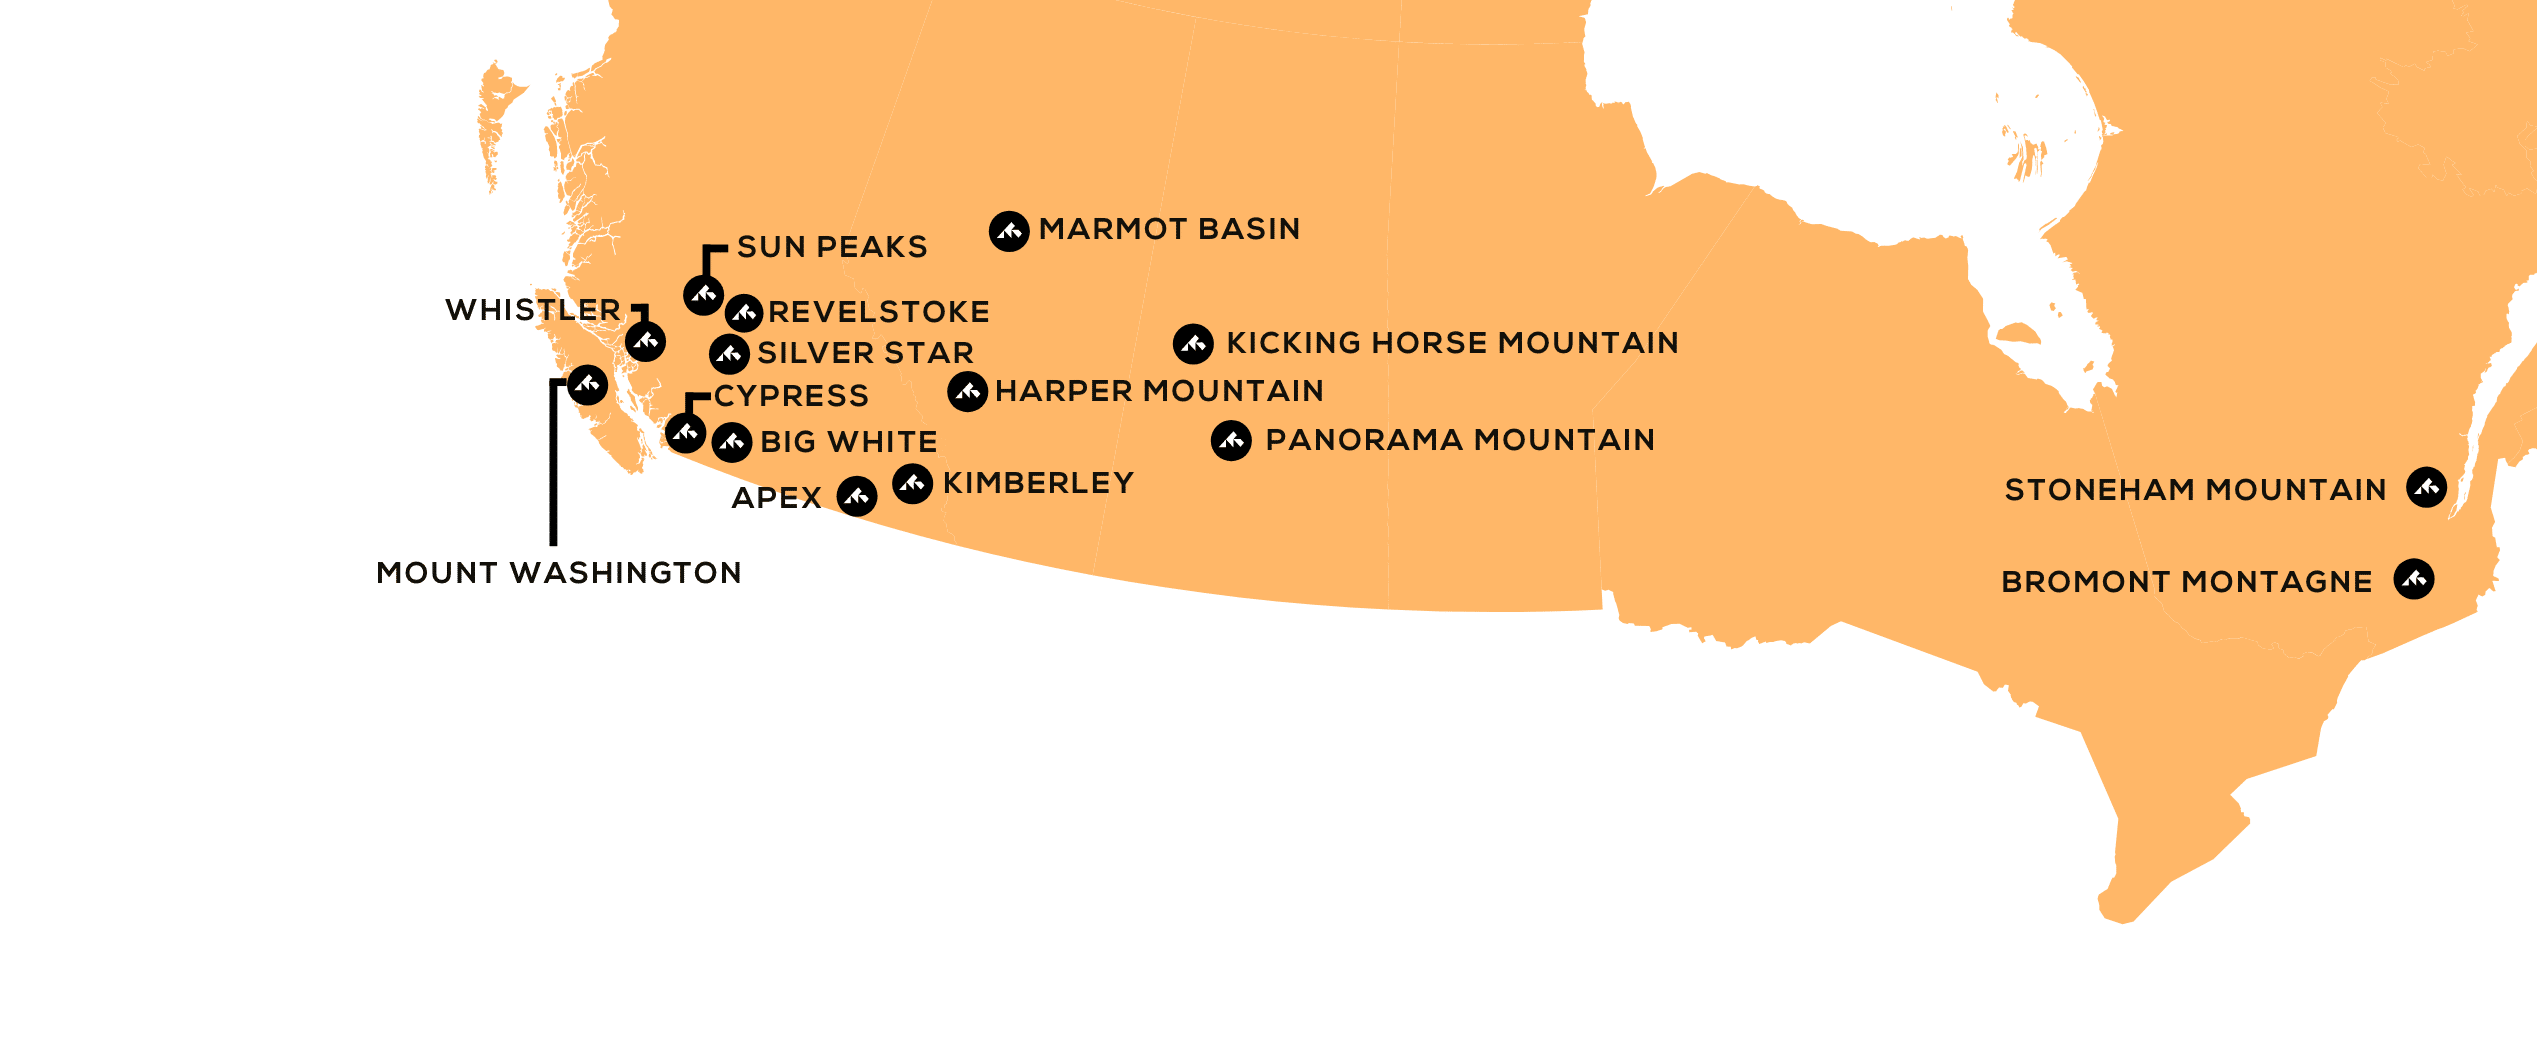 ski resort map canada